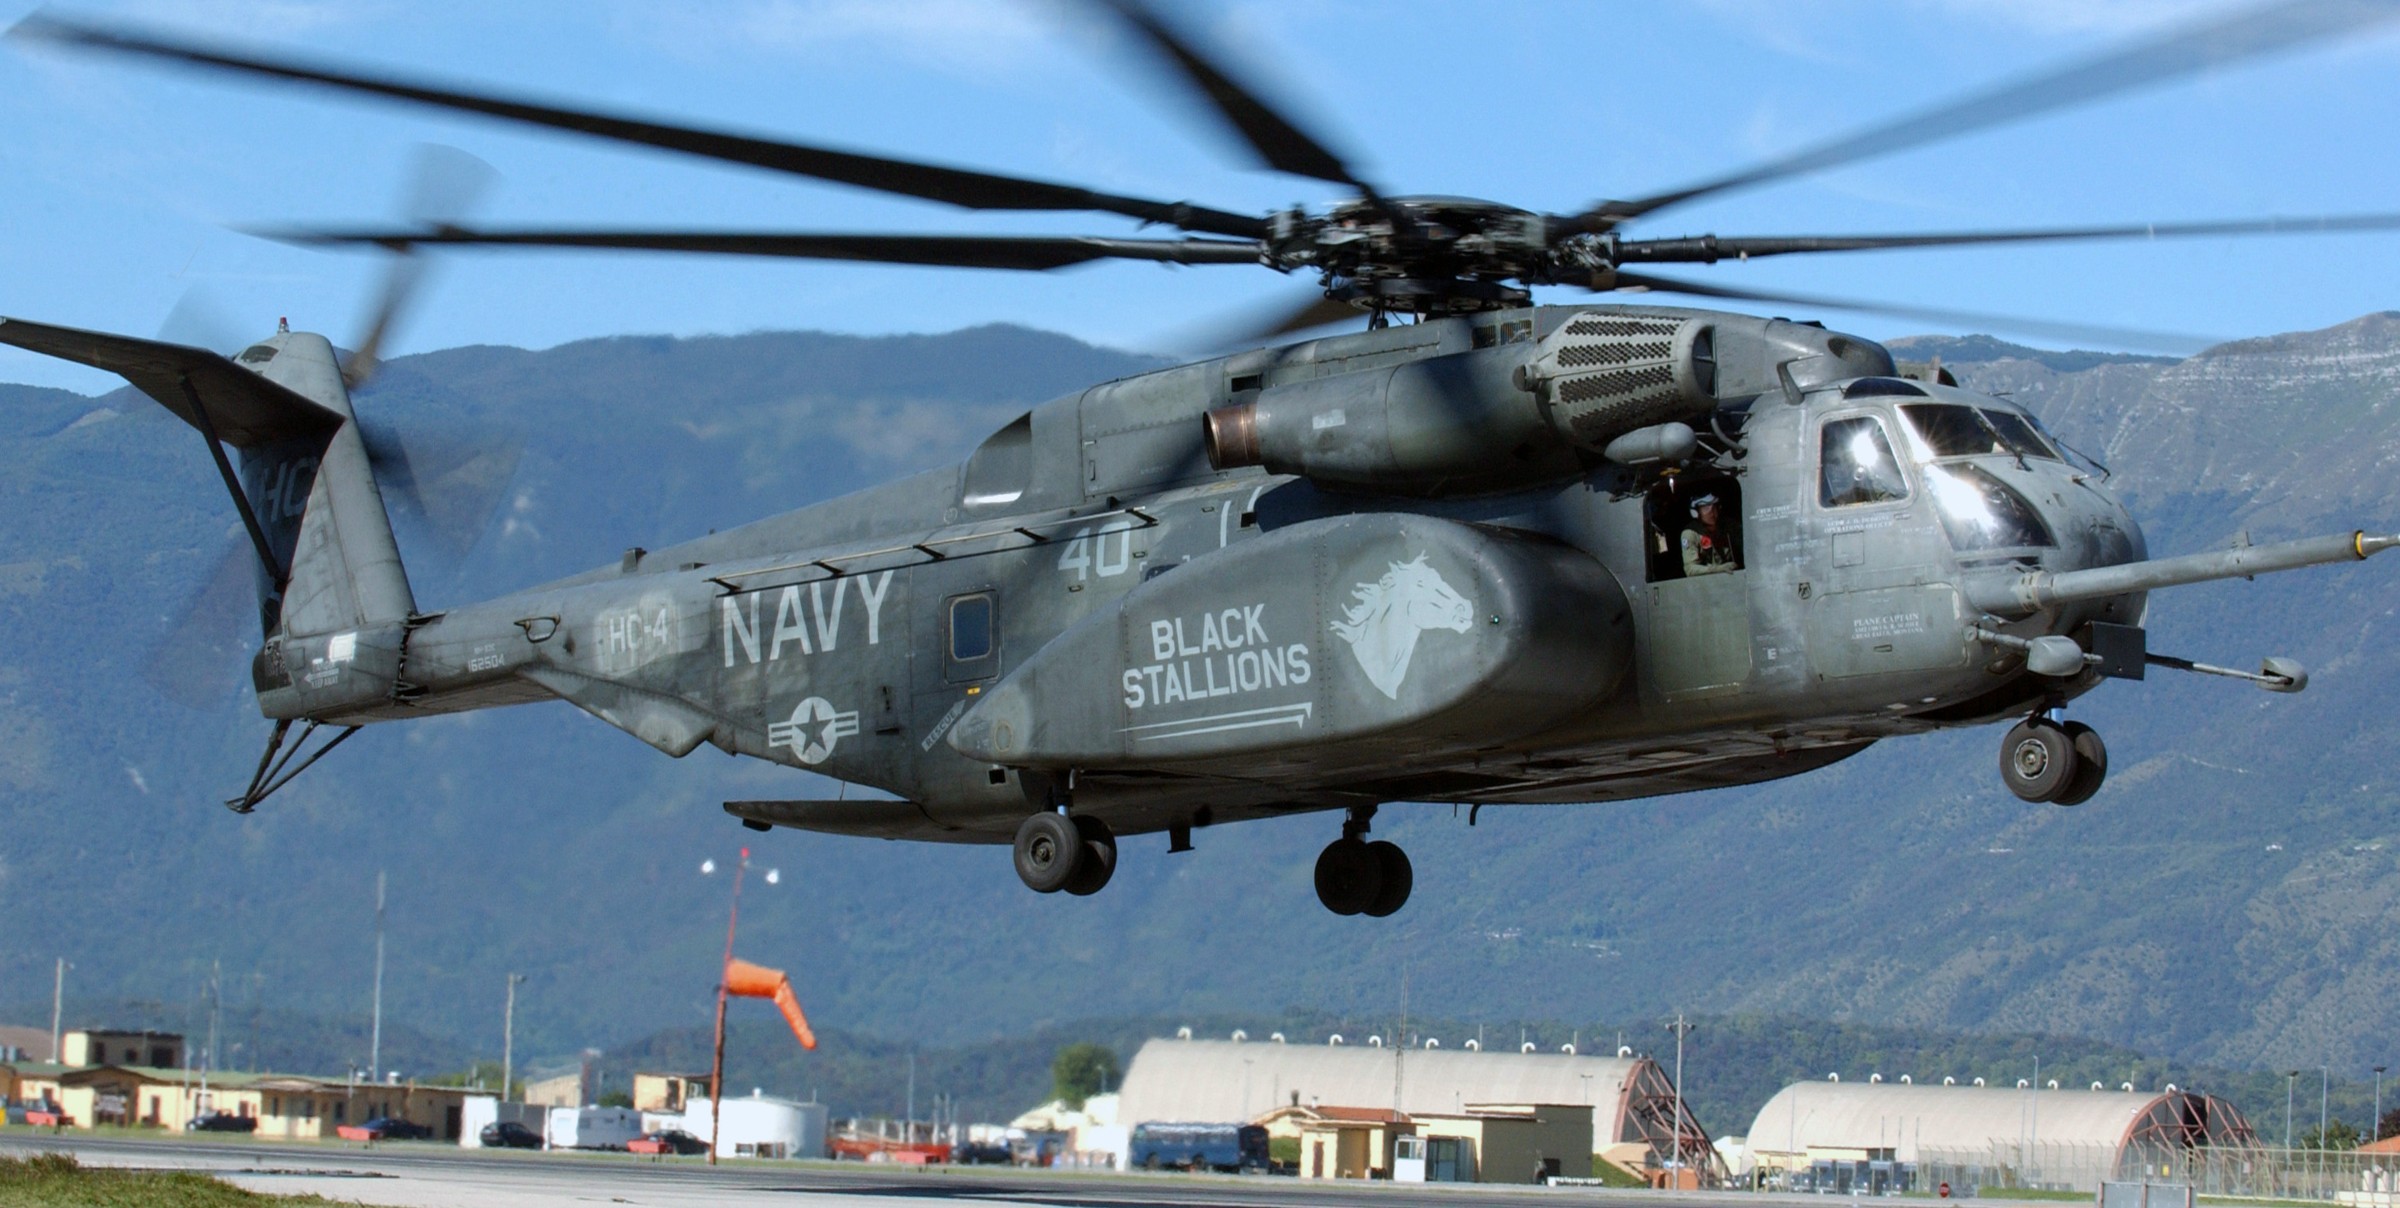 hc-4 black stallions helicopter combat support squadron mh-53e sea dragon 48